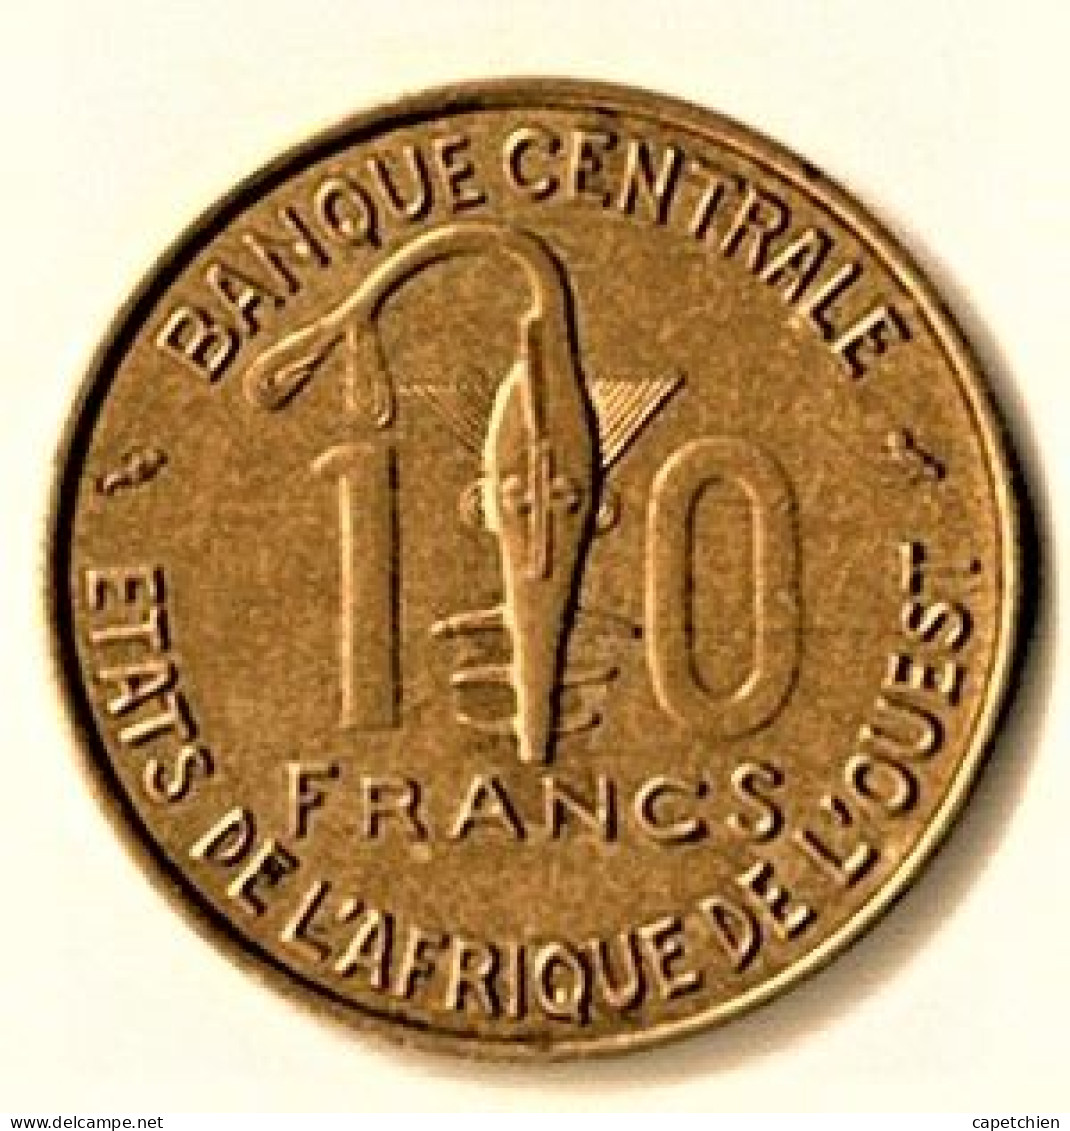 ETAT DE L'AFRIQUE DE L'OUEST / 10 FRANCS / 1969 - África Occidental Francesa